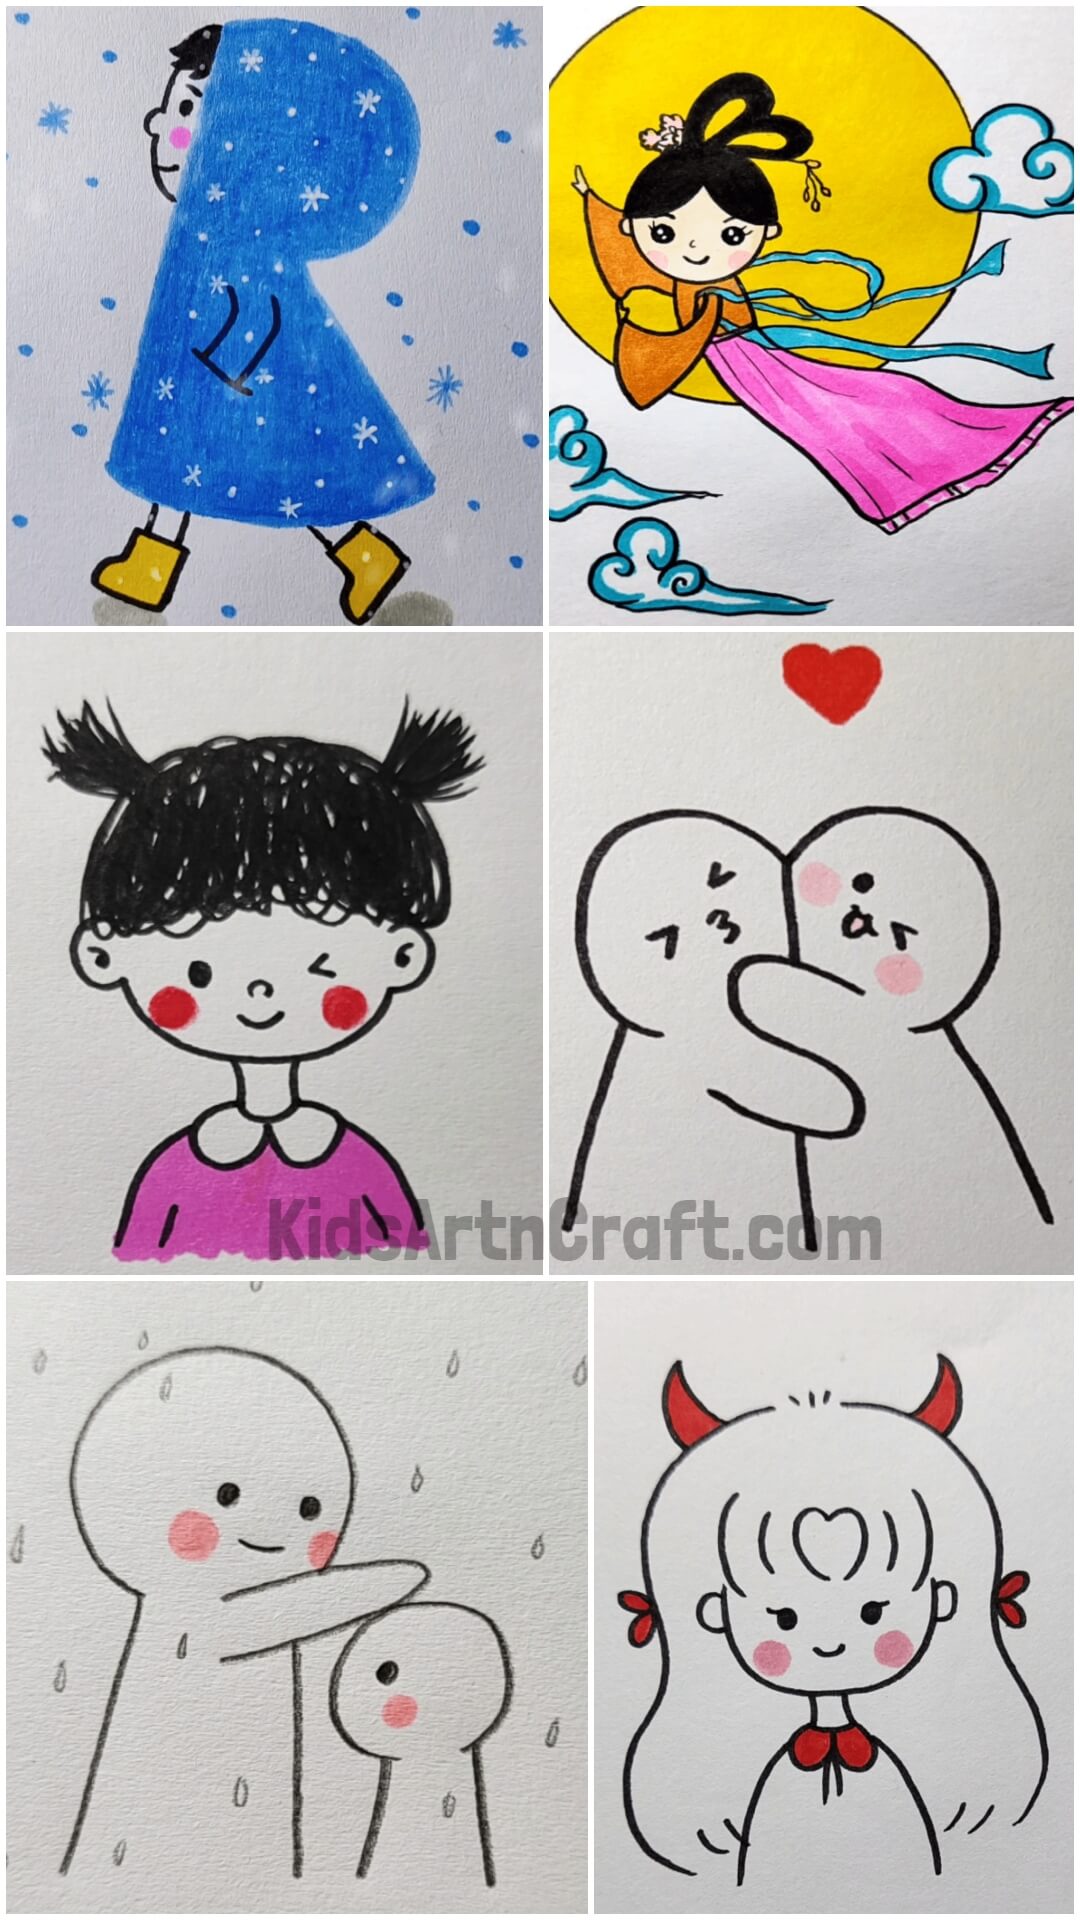 Teach Your Kids The Joyful Art Of Drawing